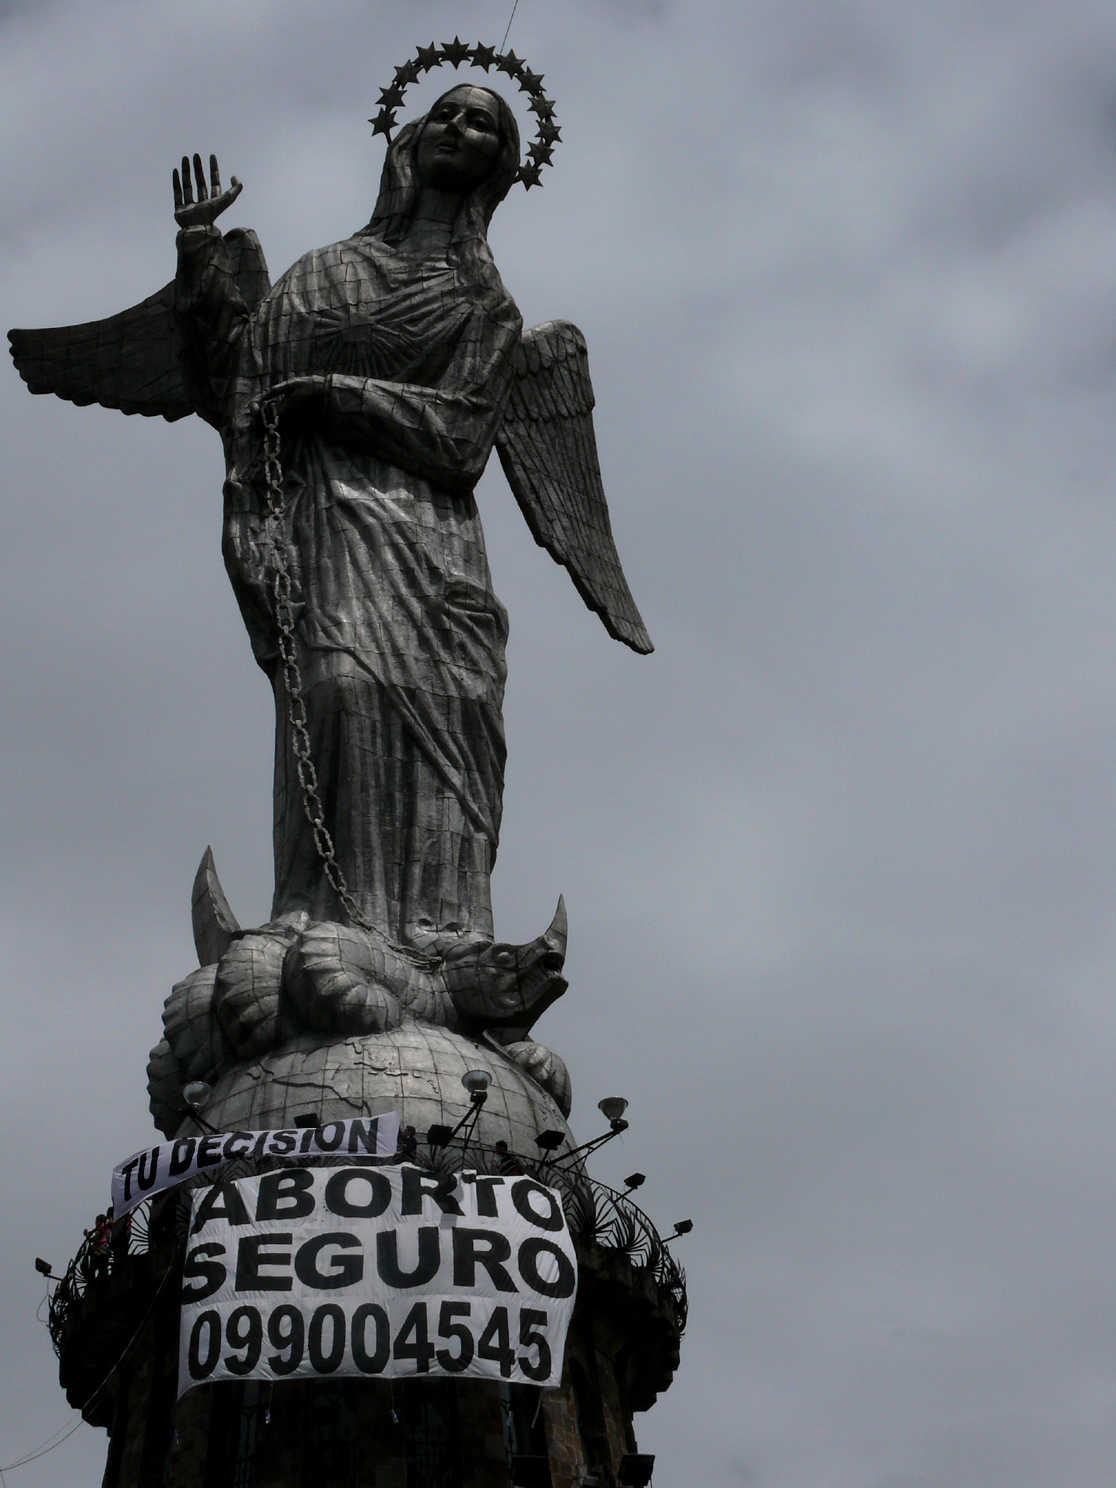 Virgin con bandera aborto seguro, Quito